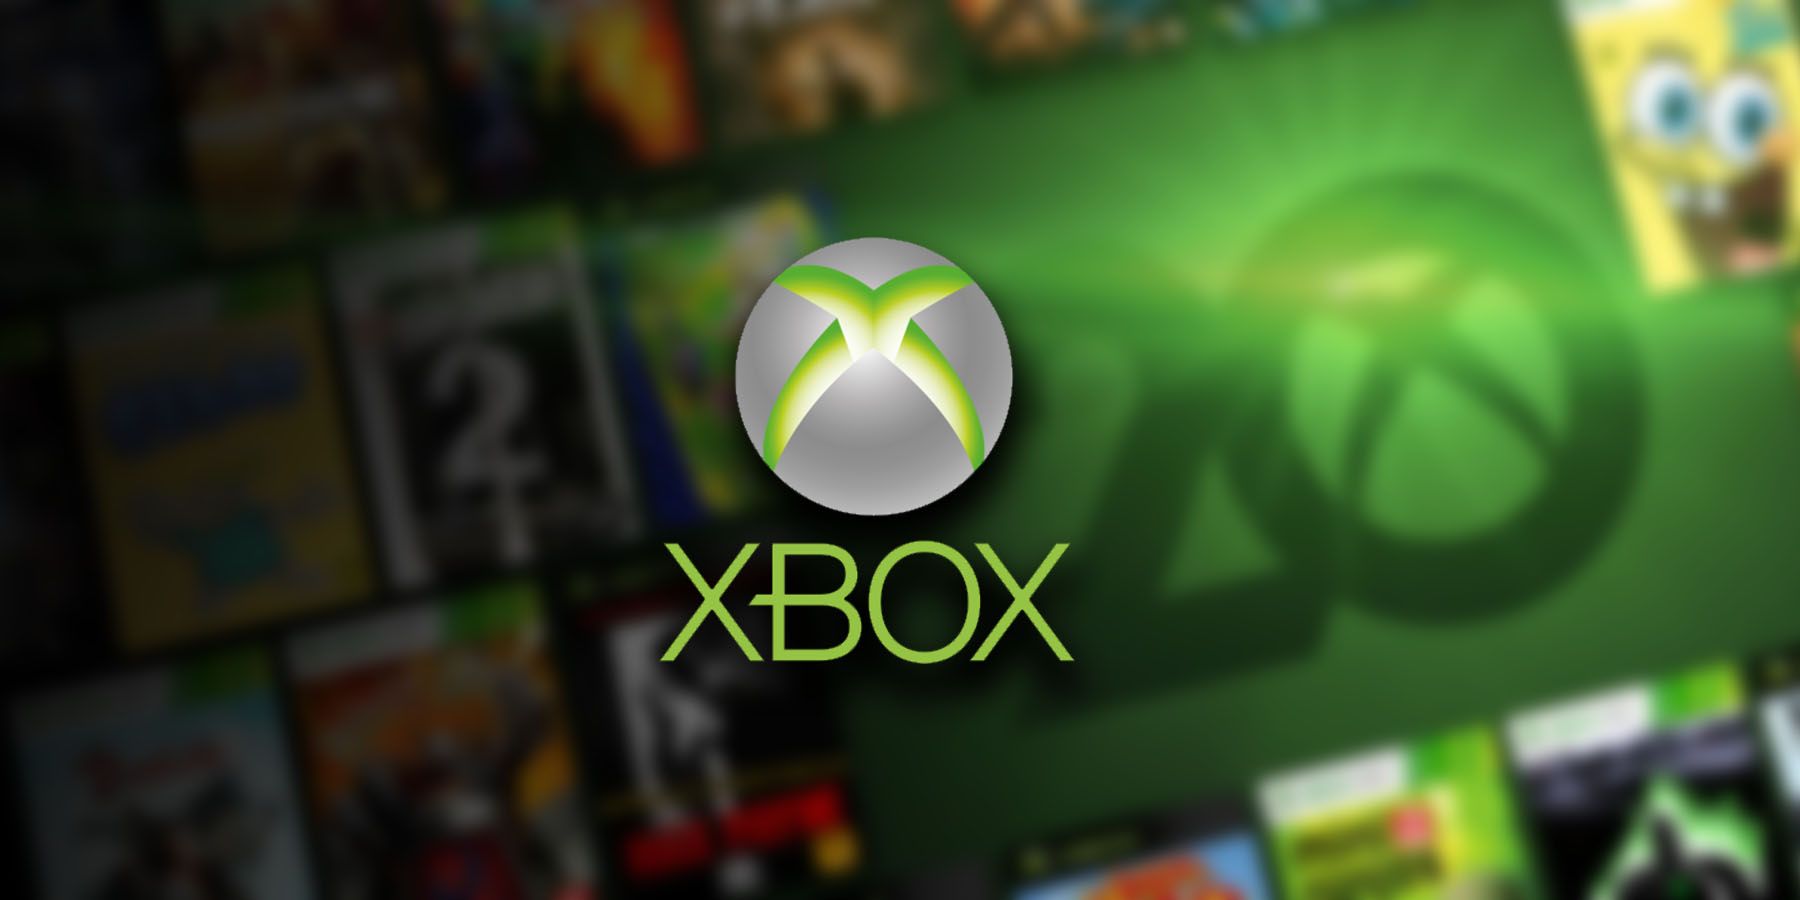 Xbox store image edit